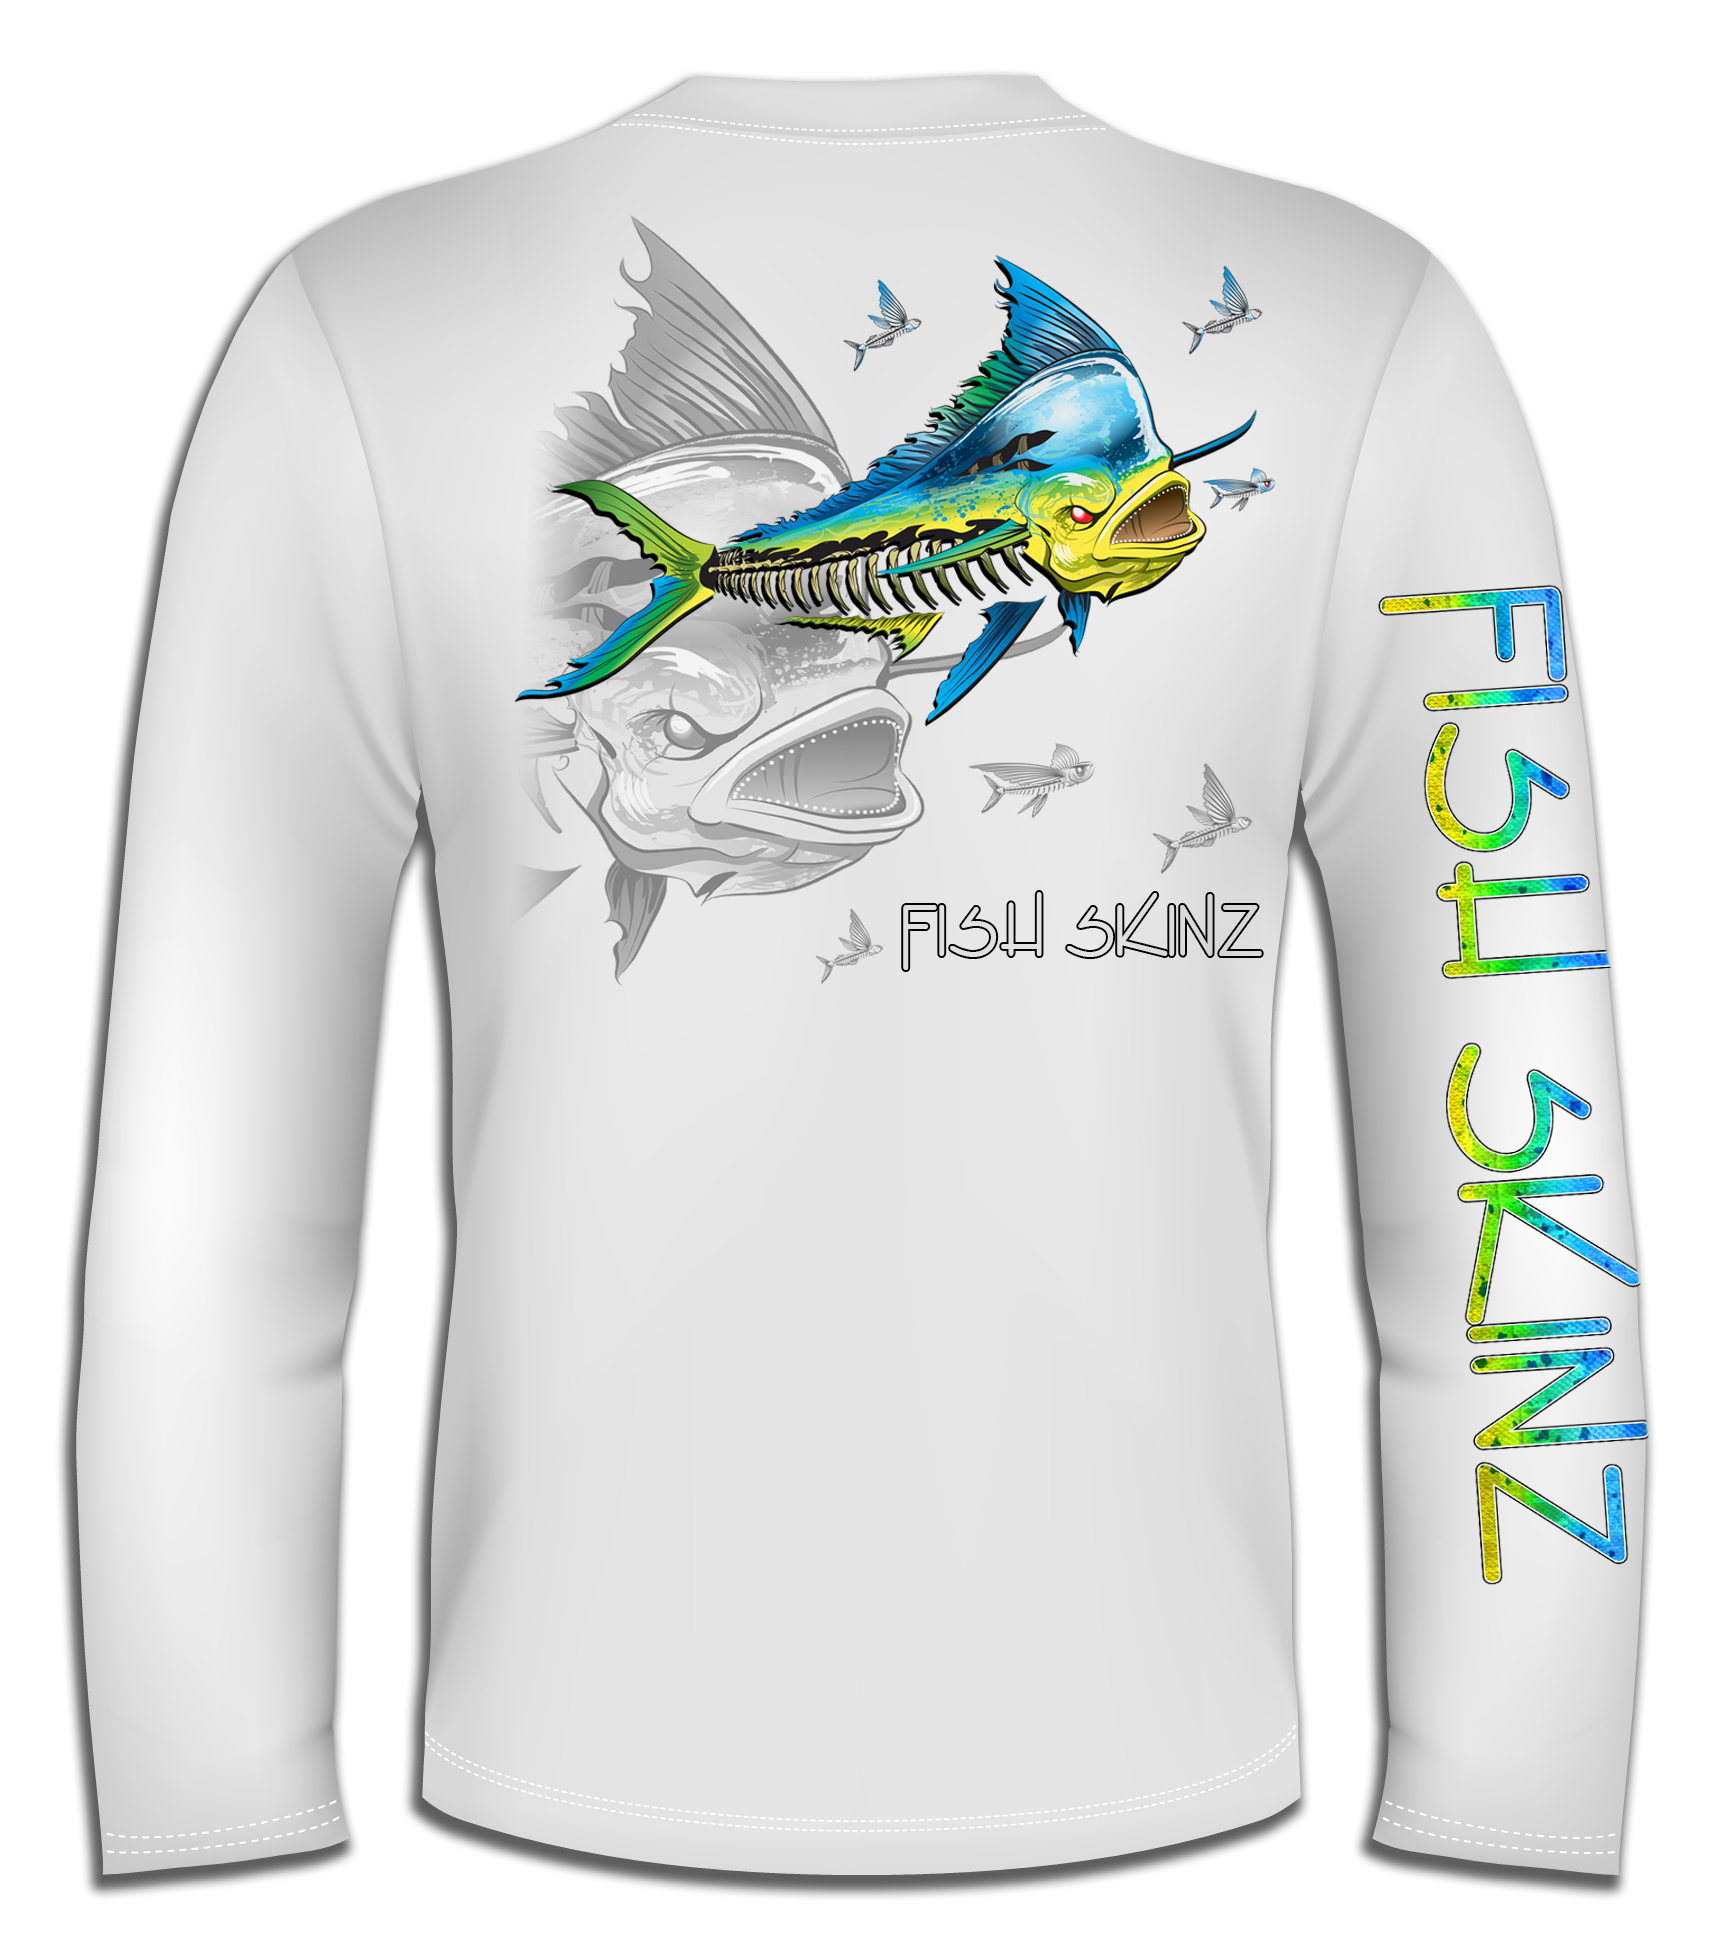 Fish On green shirt Customize Name Long Sleeve Fishing Shirts UV